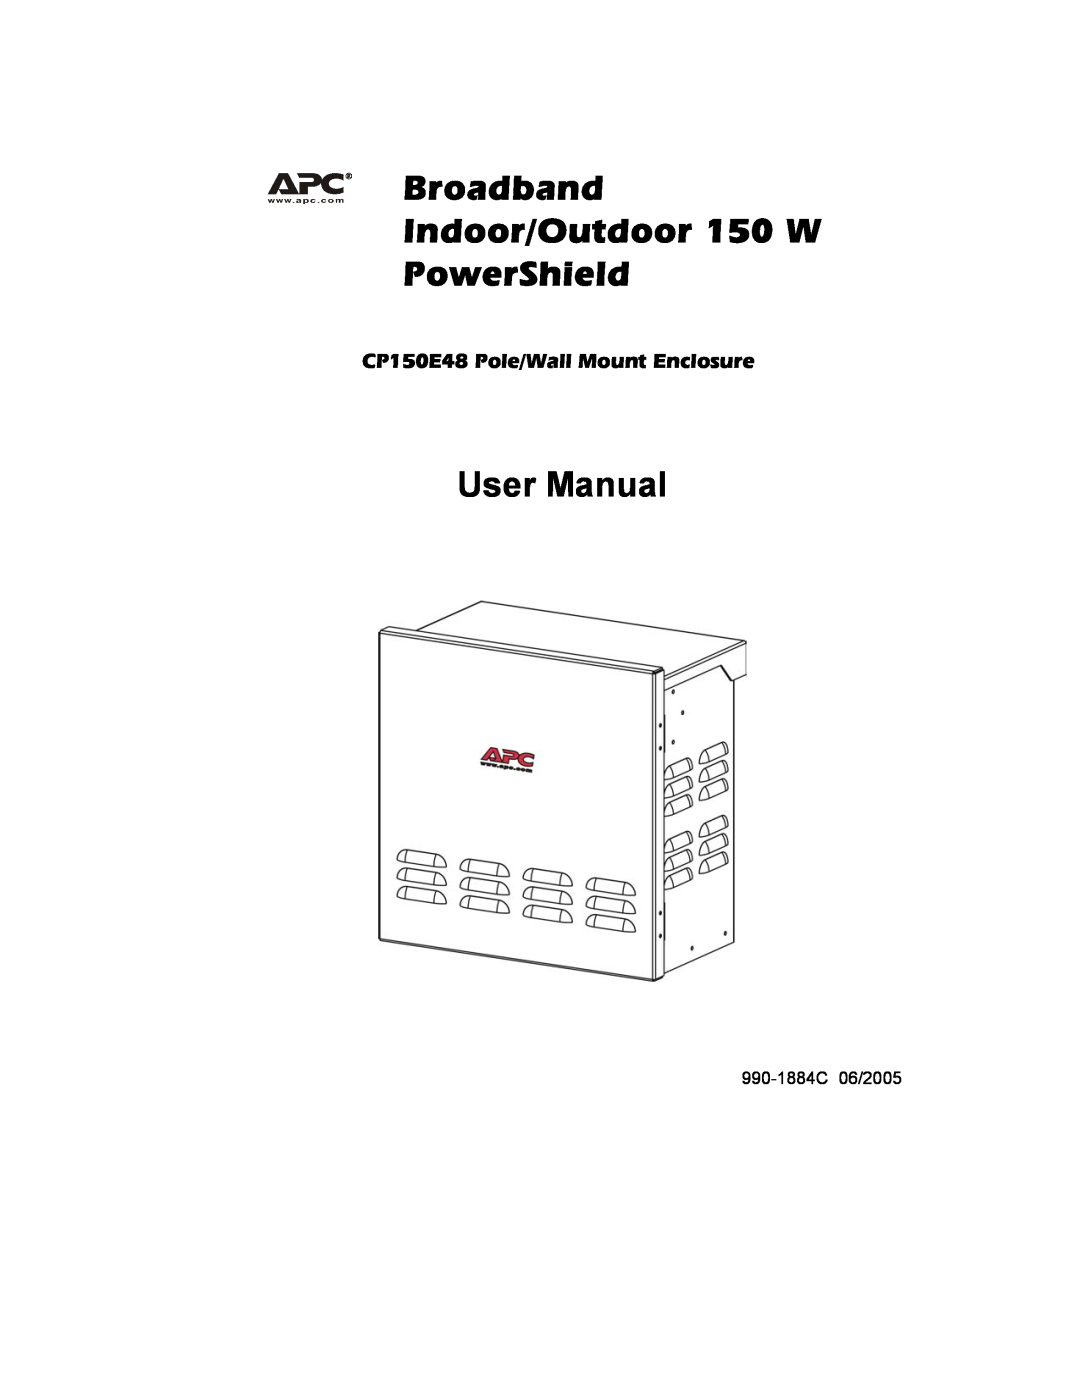 American Power Conversion CP150E48 user manual 990-1884C 06/2005, Broadband Indoor/Outdoor 150 W PowerShield, User Manual 